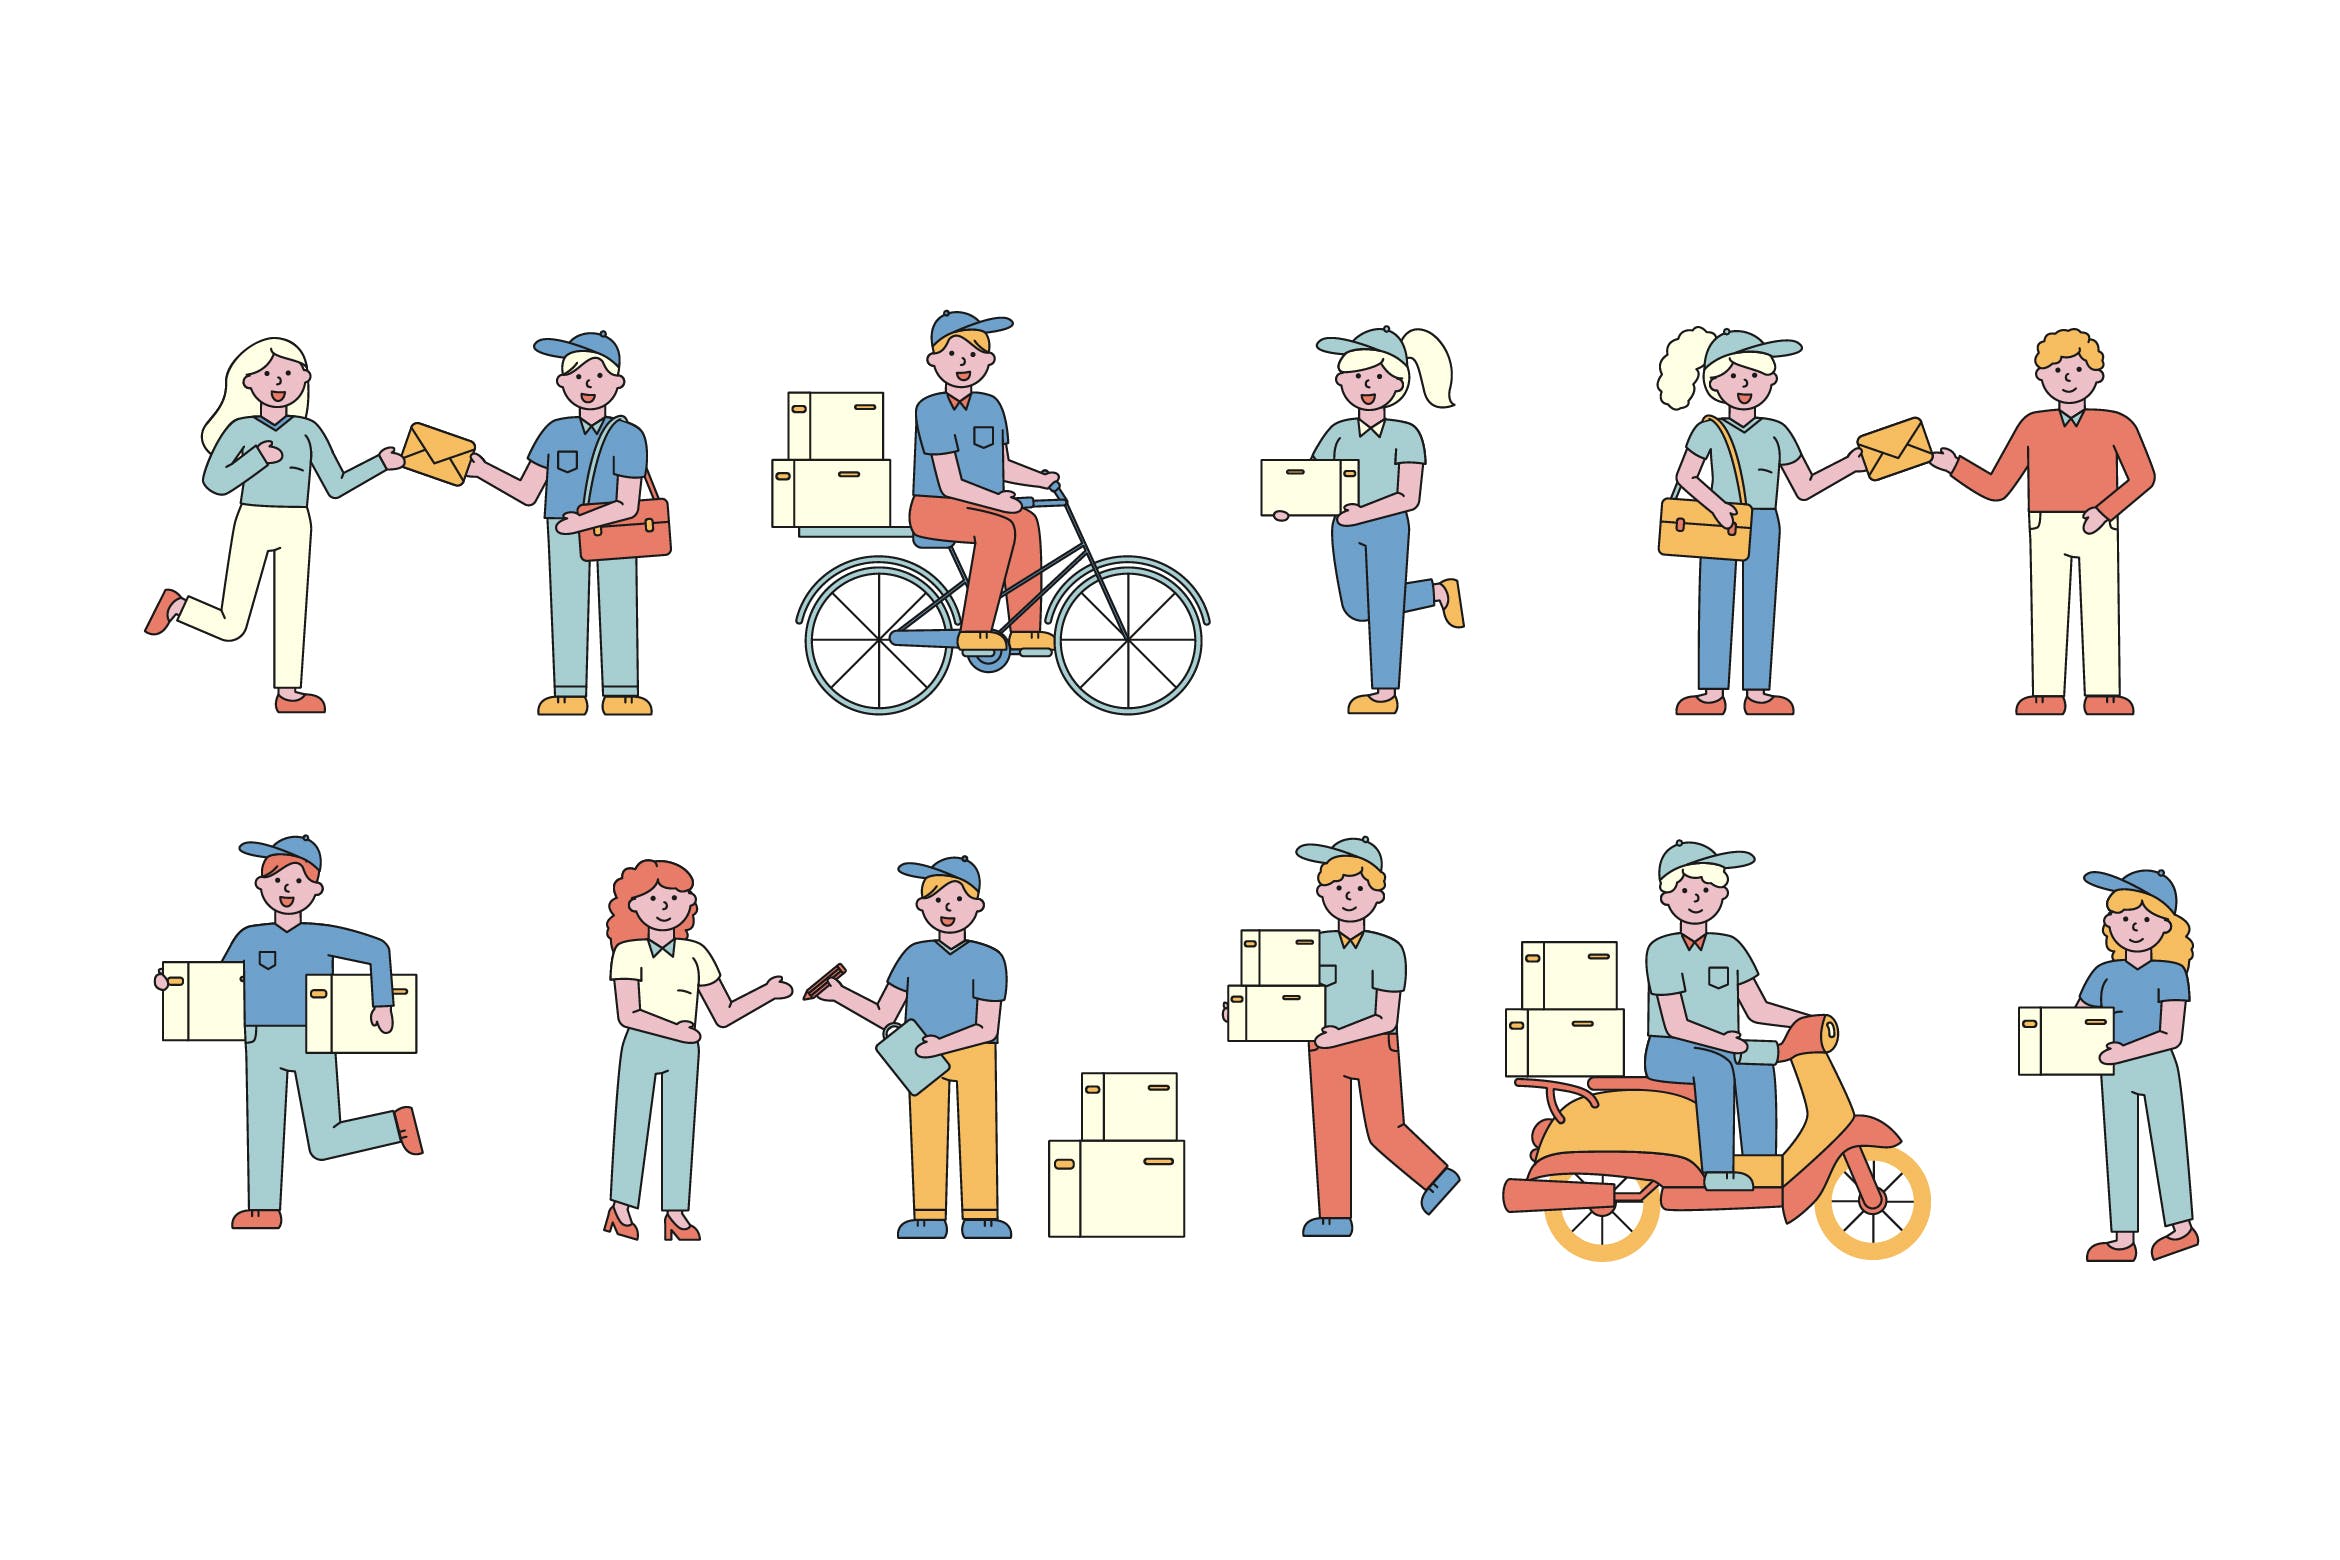 送药上门人物形象线条艺术矢量插画素材库精选素材 Mail delivery Lineart People Character Collection插图